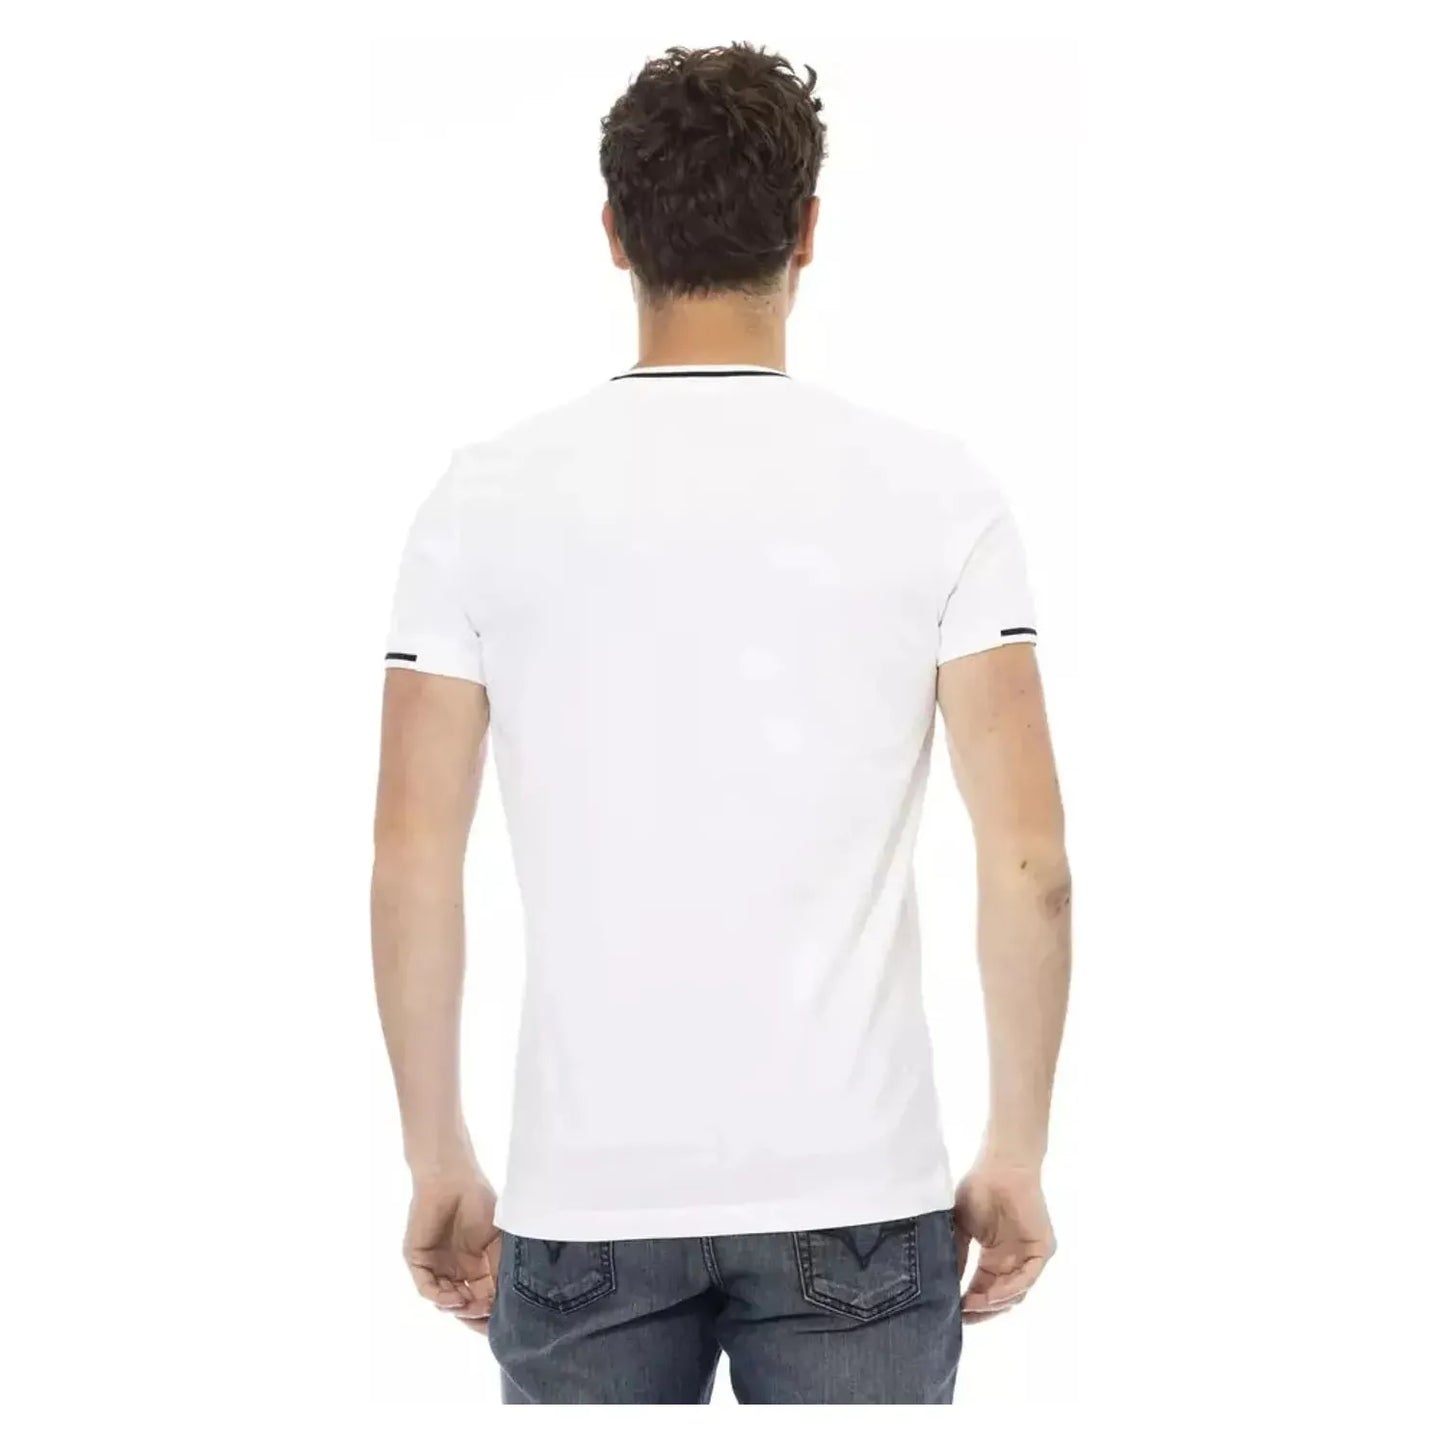 Trussardi Action Elegant White Tee with Artful Front Print white-cotton-t-shirt-29